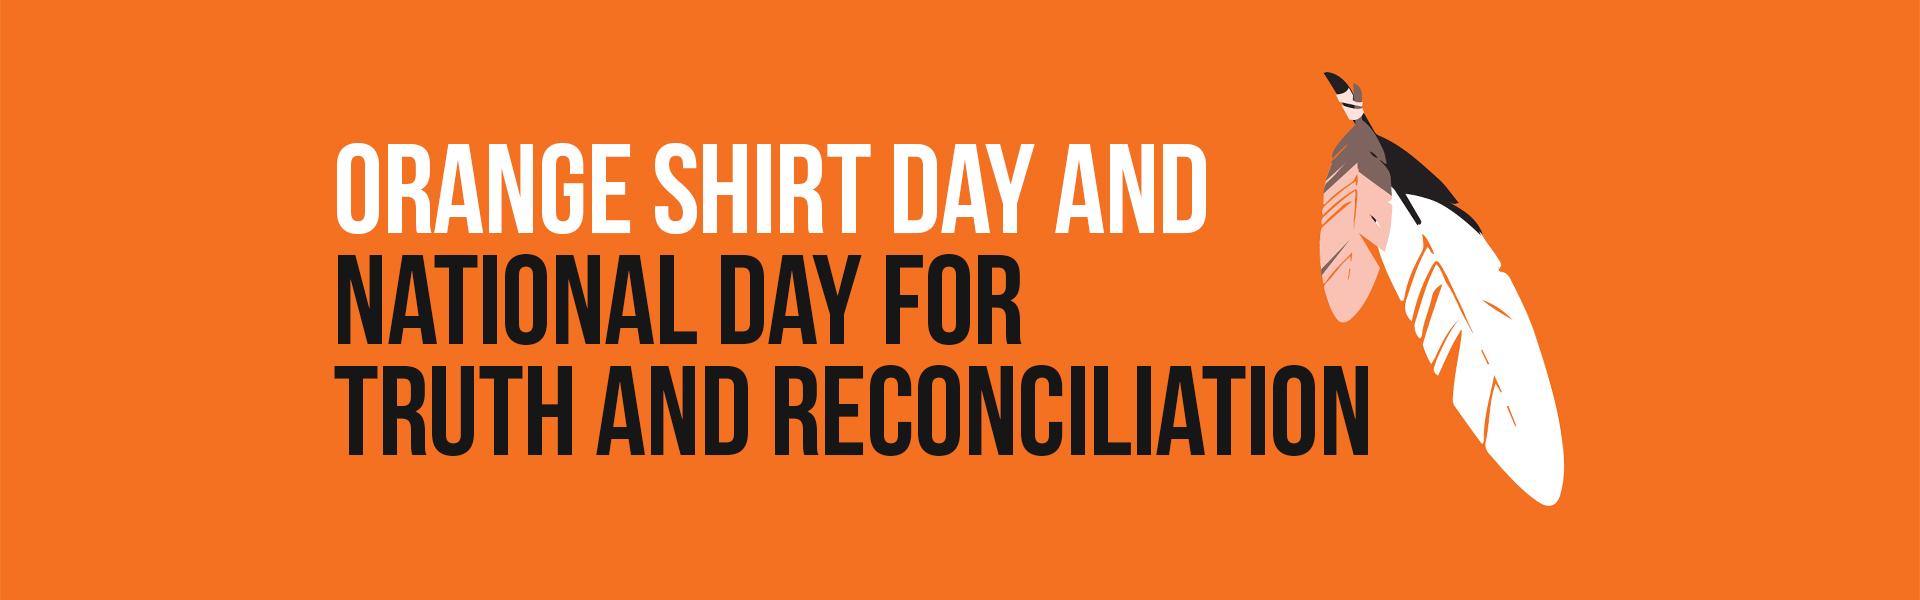 Orange Shirt Day web banner